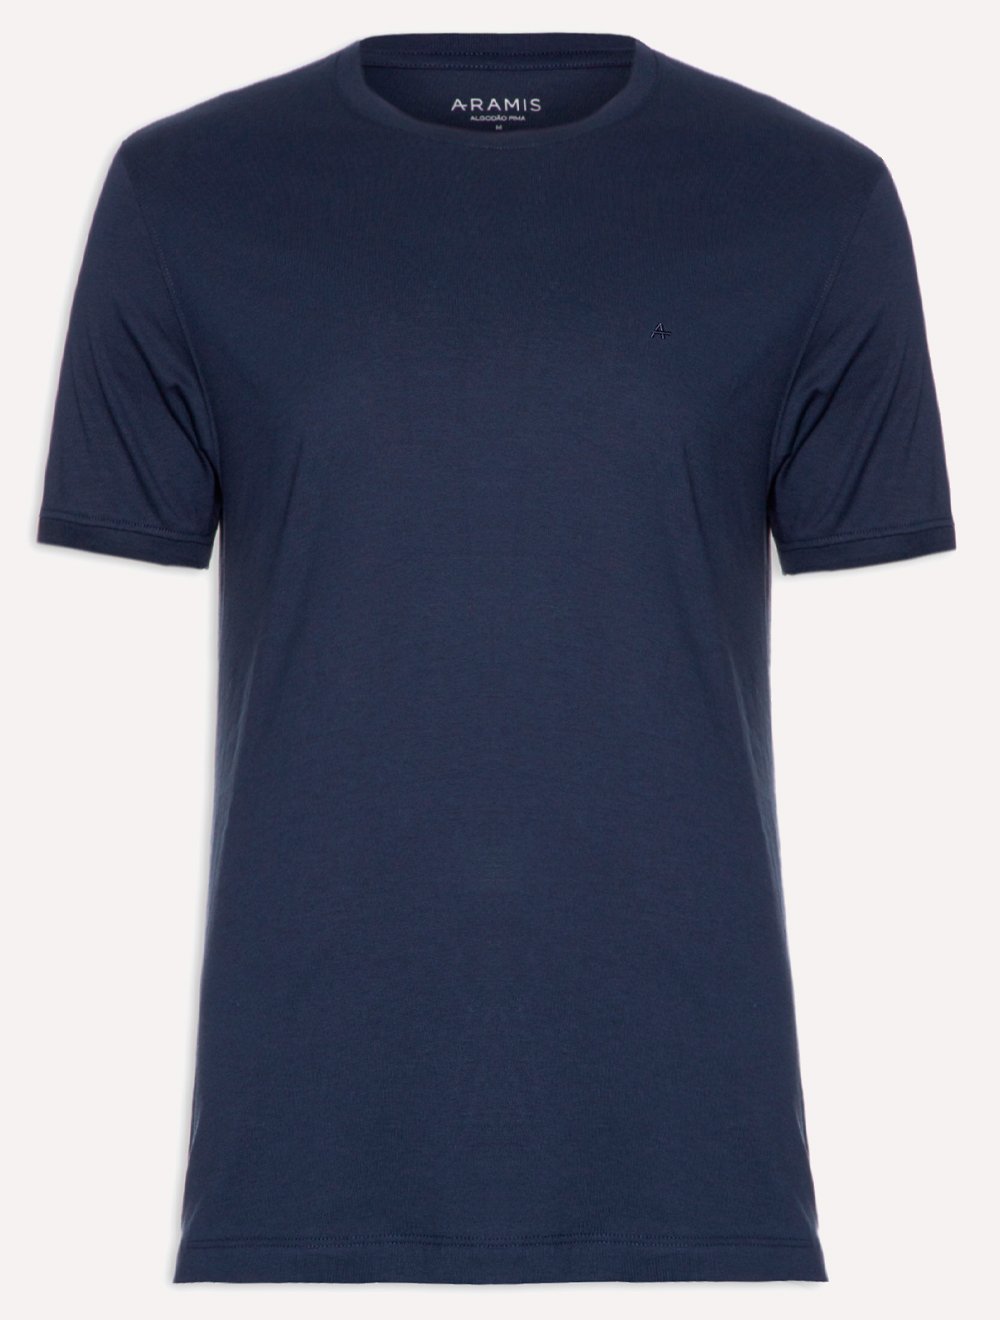 Camiseta Aramis Masculina Jersey Algodão Pima Surton Azul Marinho